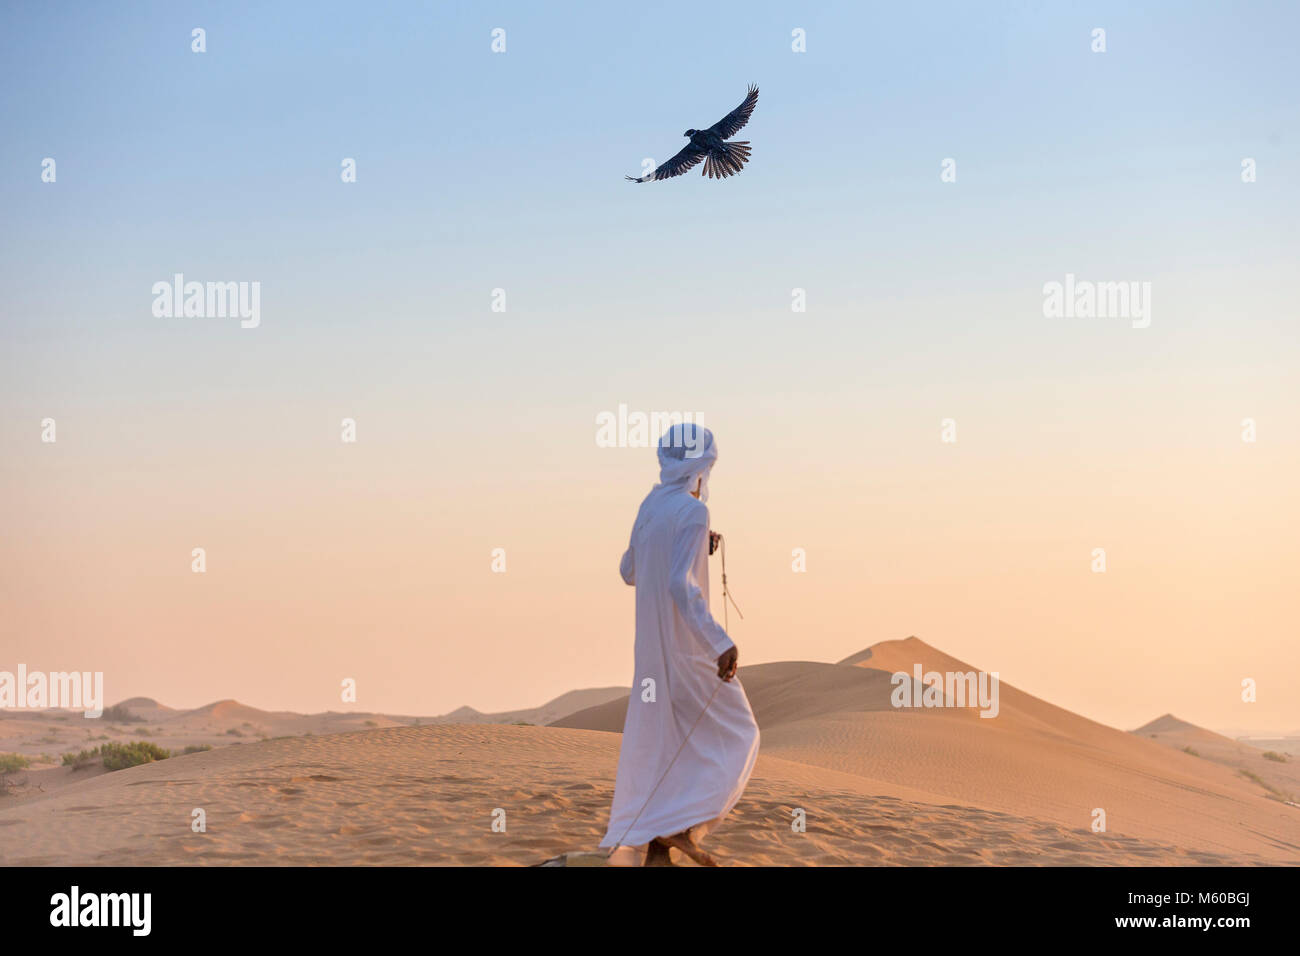 Saker Falcon (Falco cherrug). Falconer flying a falcon in the desert. Abu Dhabi Stock Photo